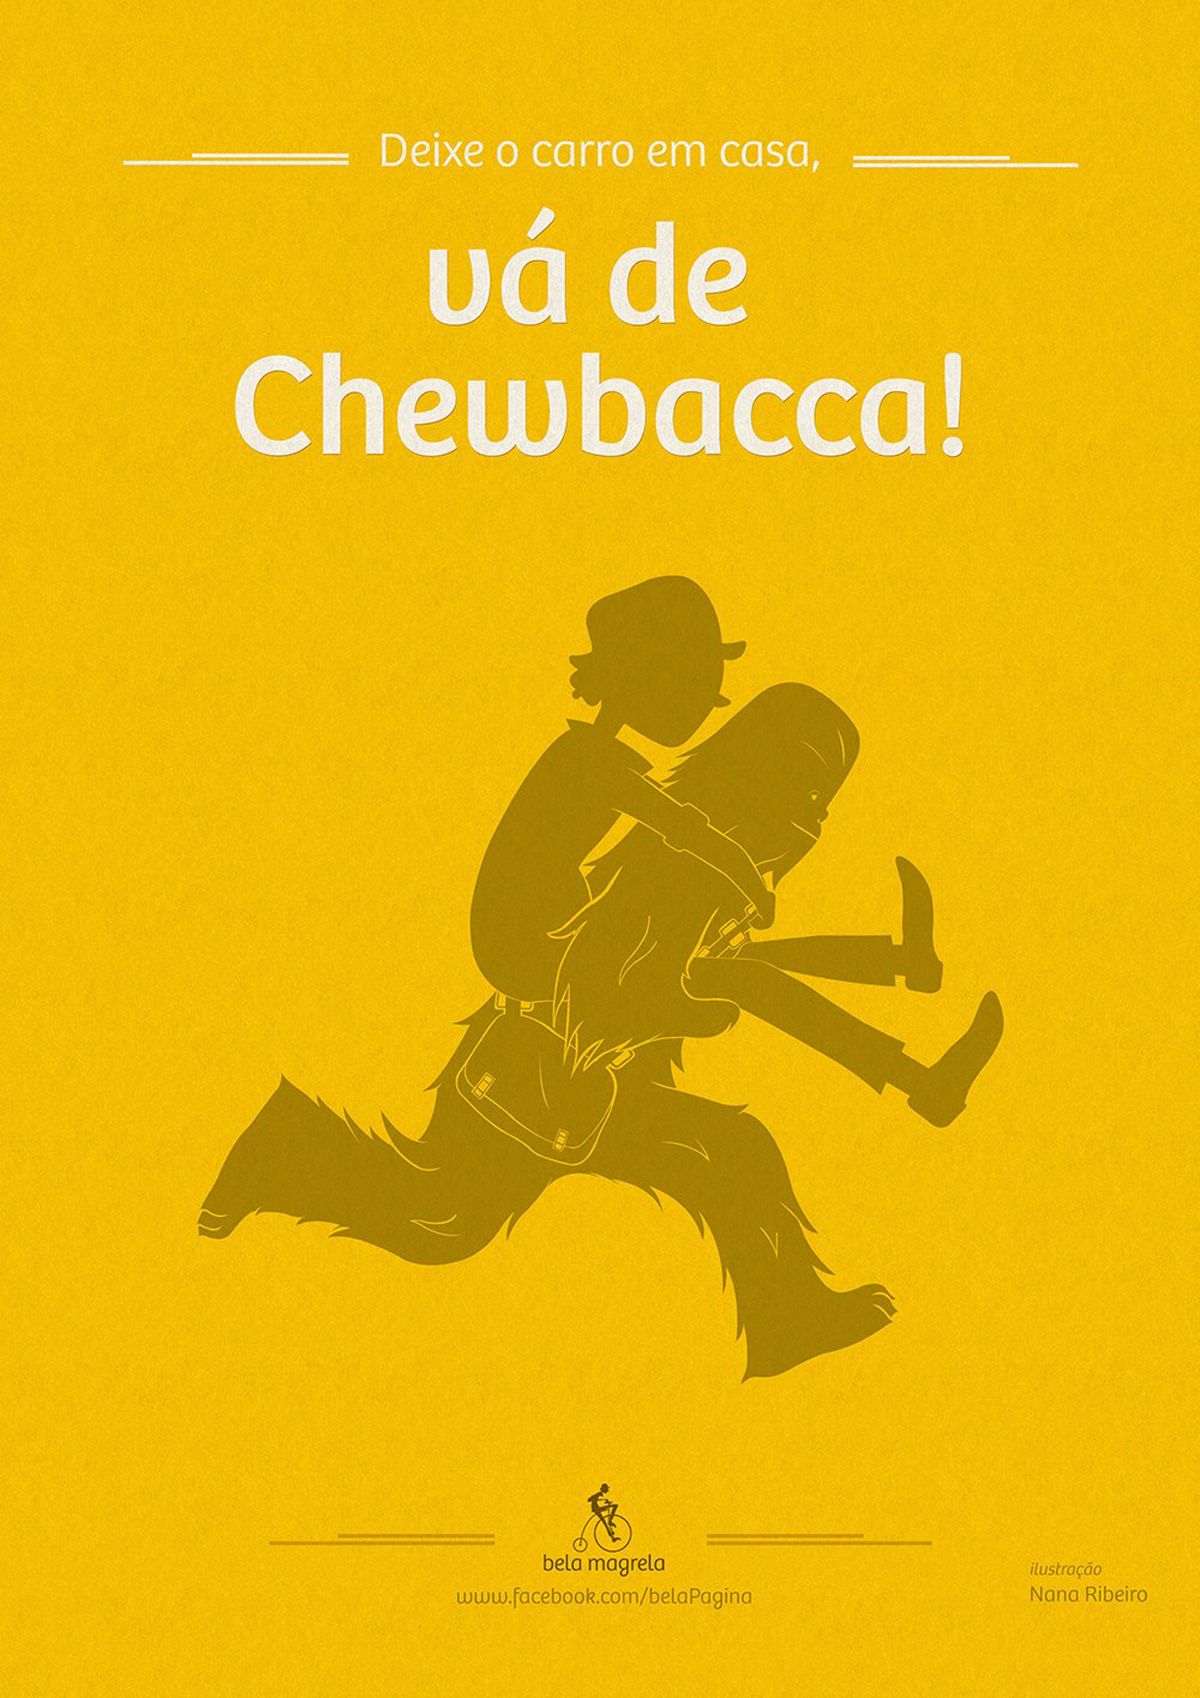 ILLUSTRATION  Chewbacca chewie star wars poster